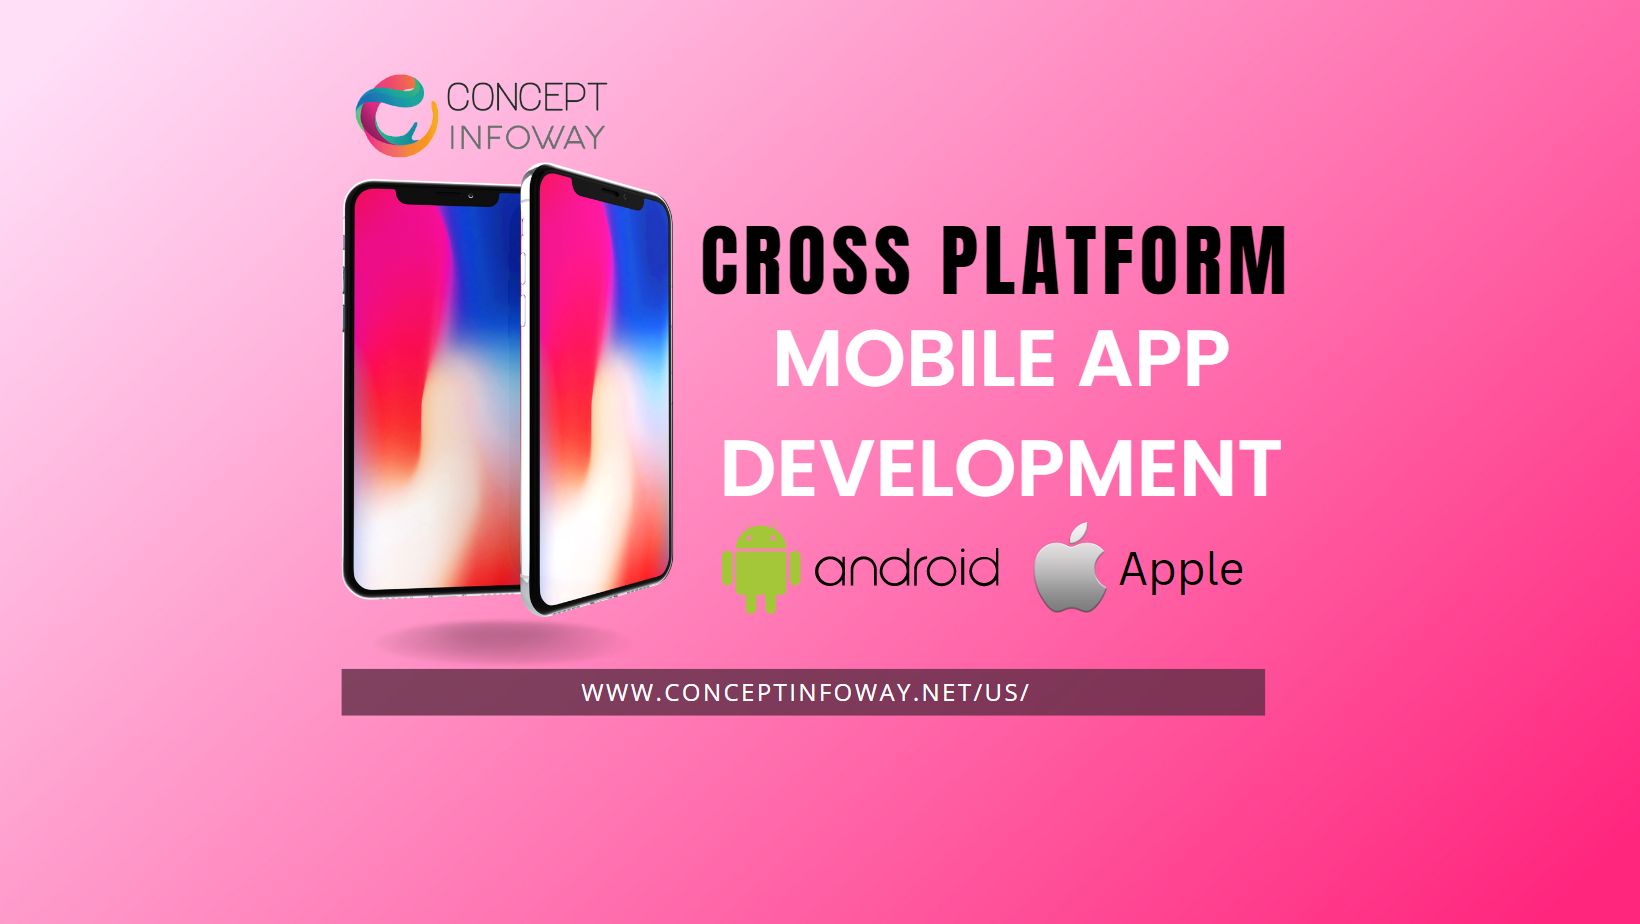 Cross Platform Mobile App Development – Do I Really Need It For My Business?